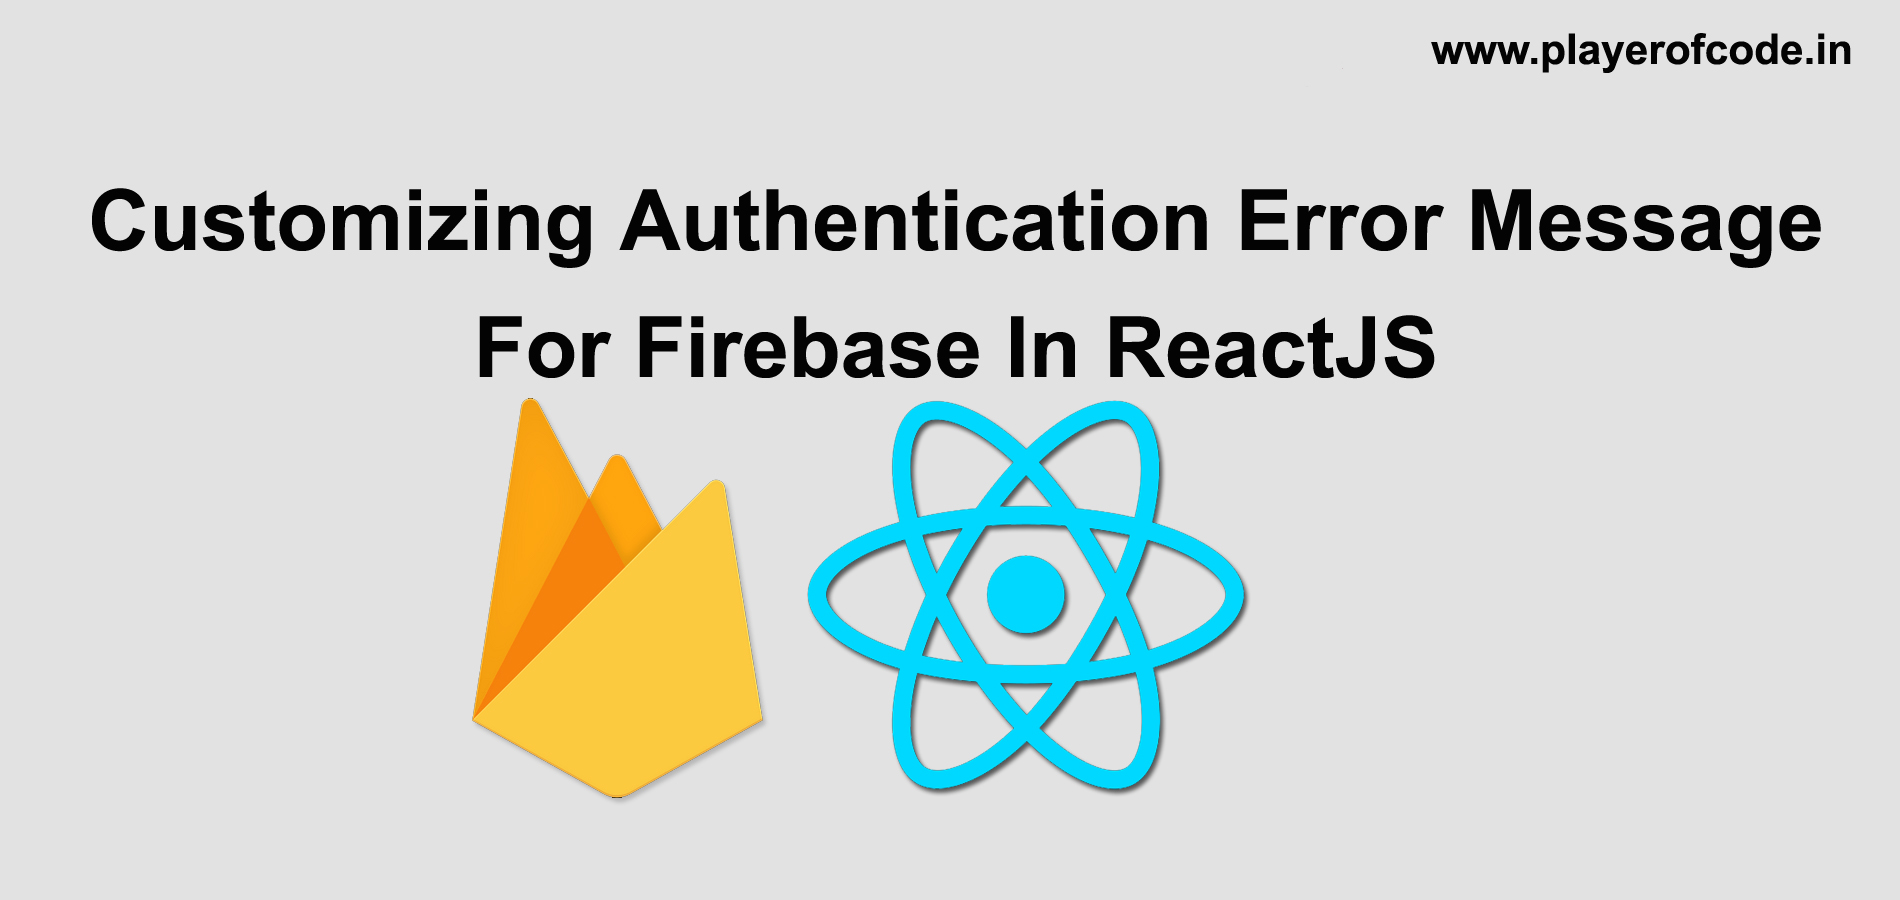 Customizing Authentication Error Message for Firebase in ReactJS